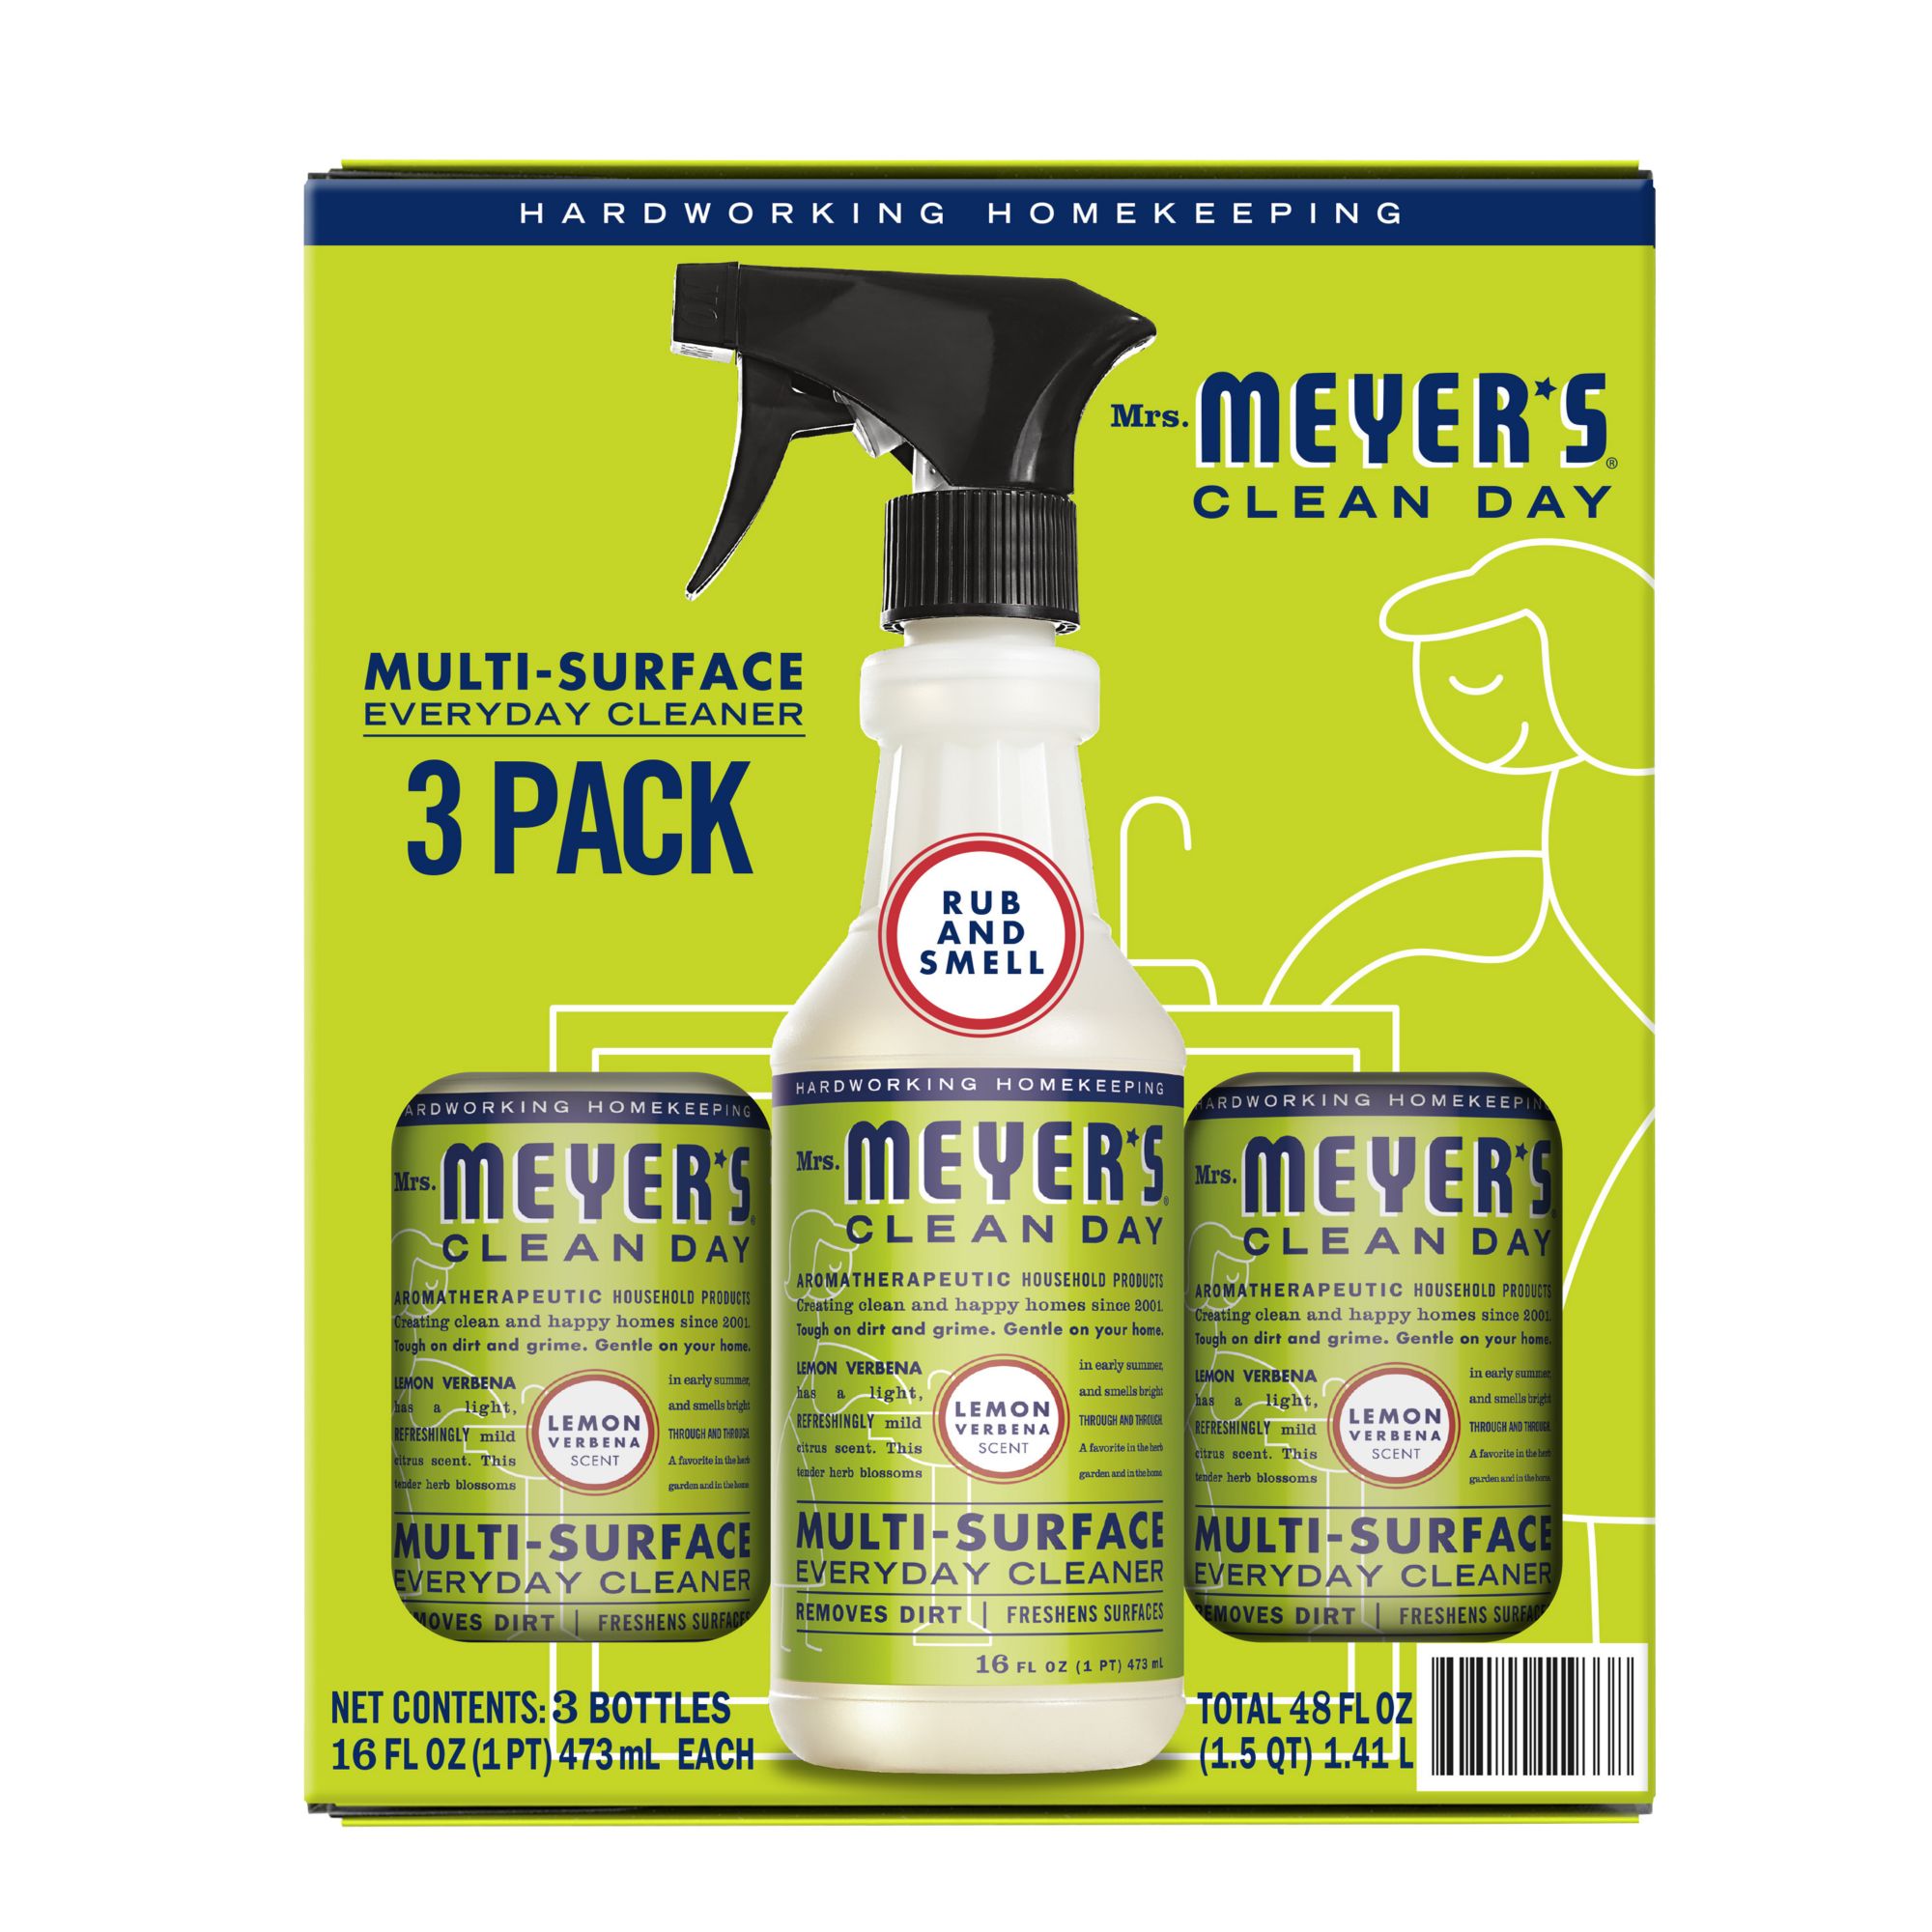 Mr. Clean, Clean Freak Deep Cleaning Mist All Purpose Spray Lavender Refill  16OZ